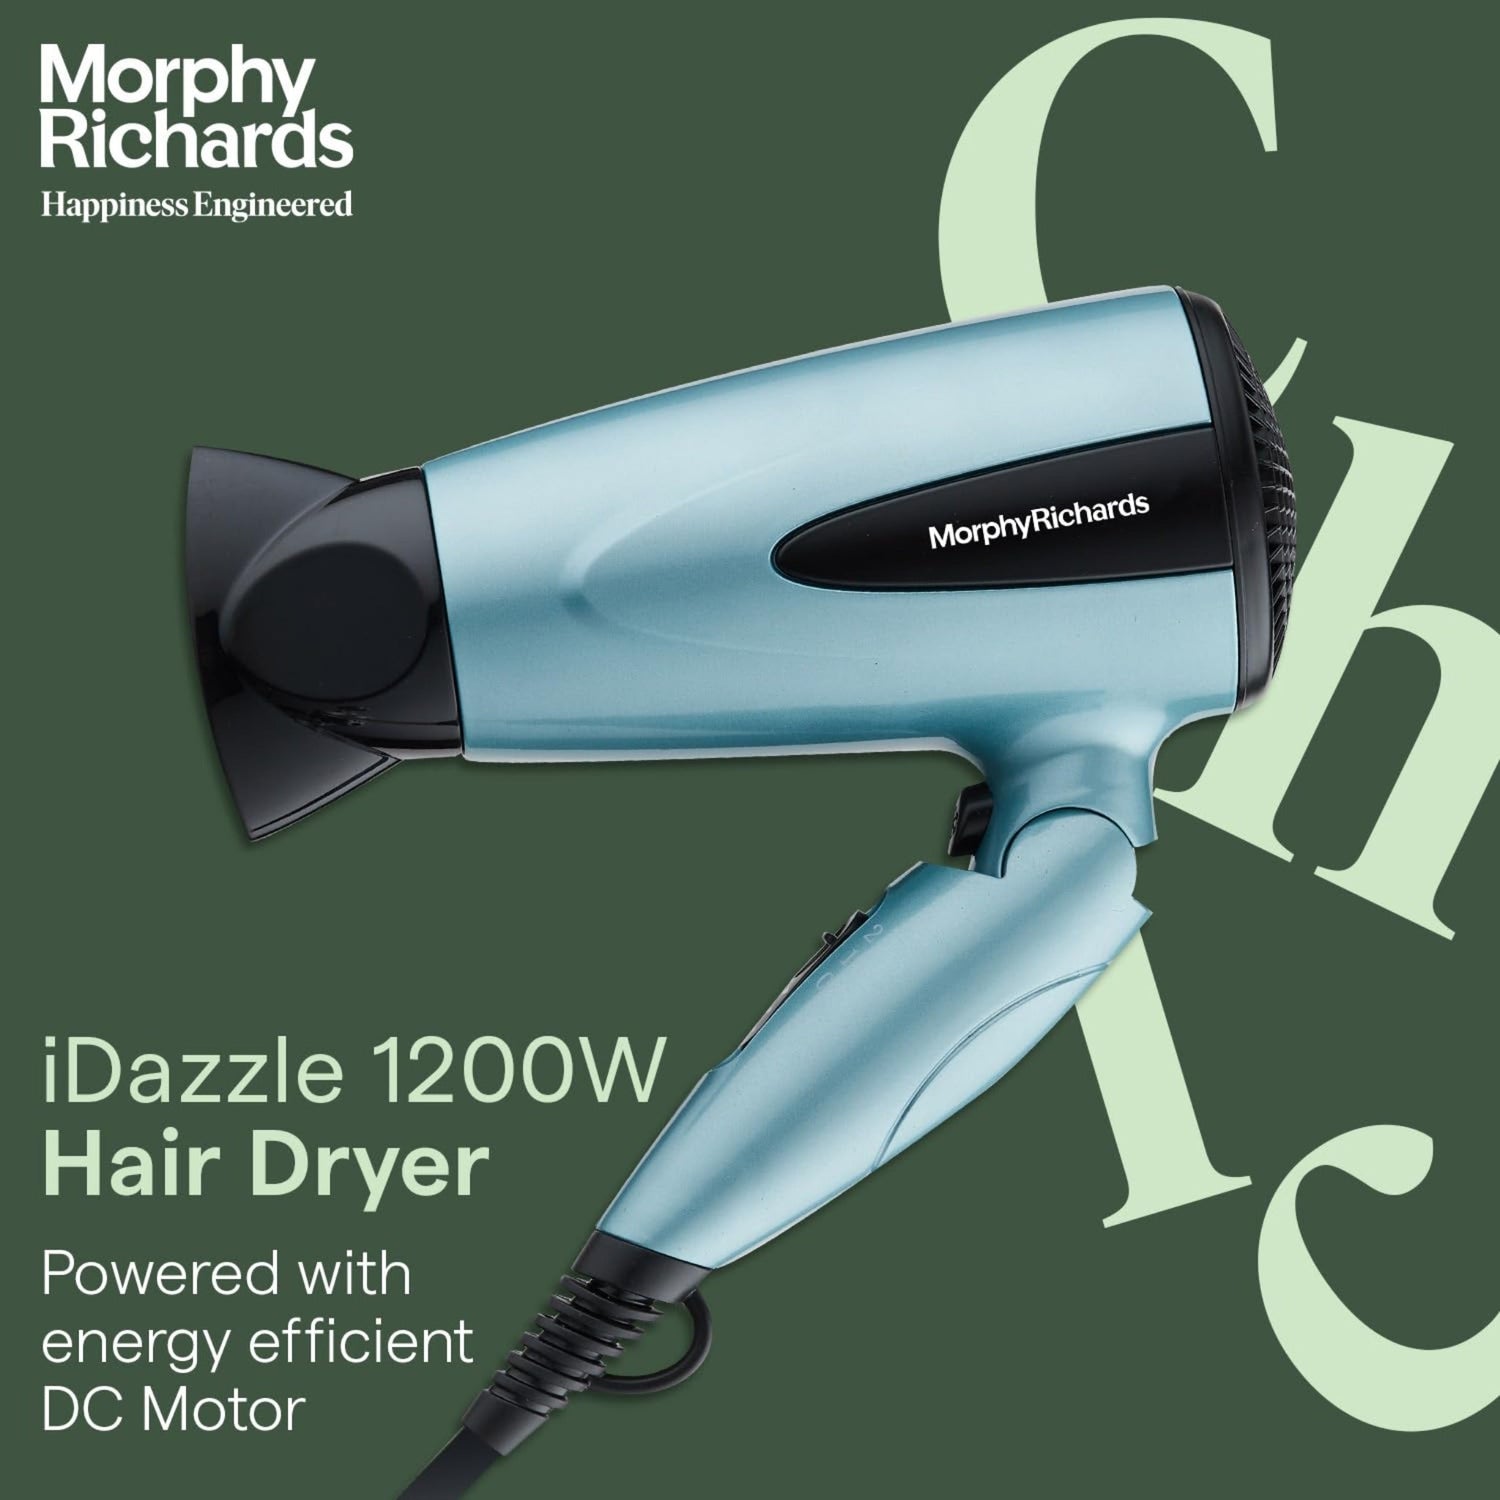 Morphy Richards iDazzle 1200W Hair Dryer